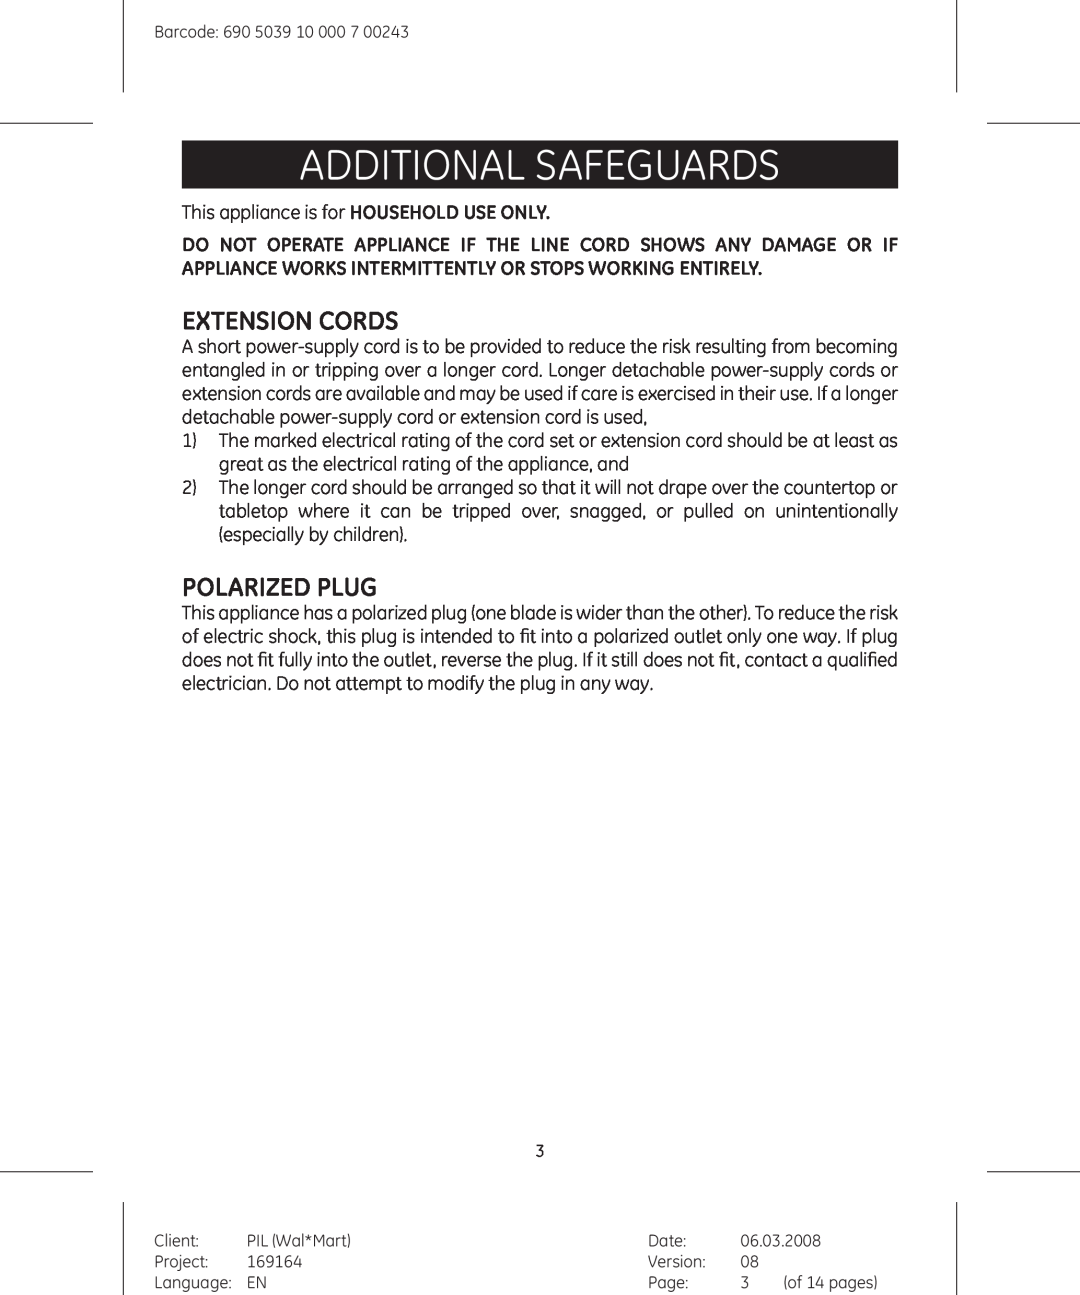 GE 690503910000700243, 681131691642 manual Additional Safeguards, Extension Cords, Polarized Plug 